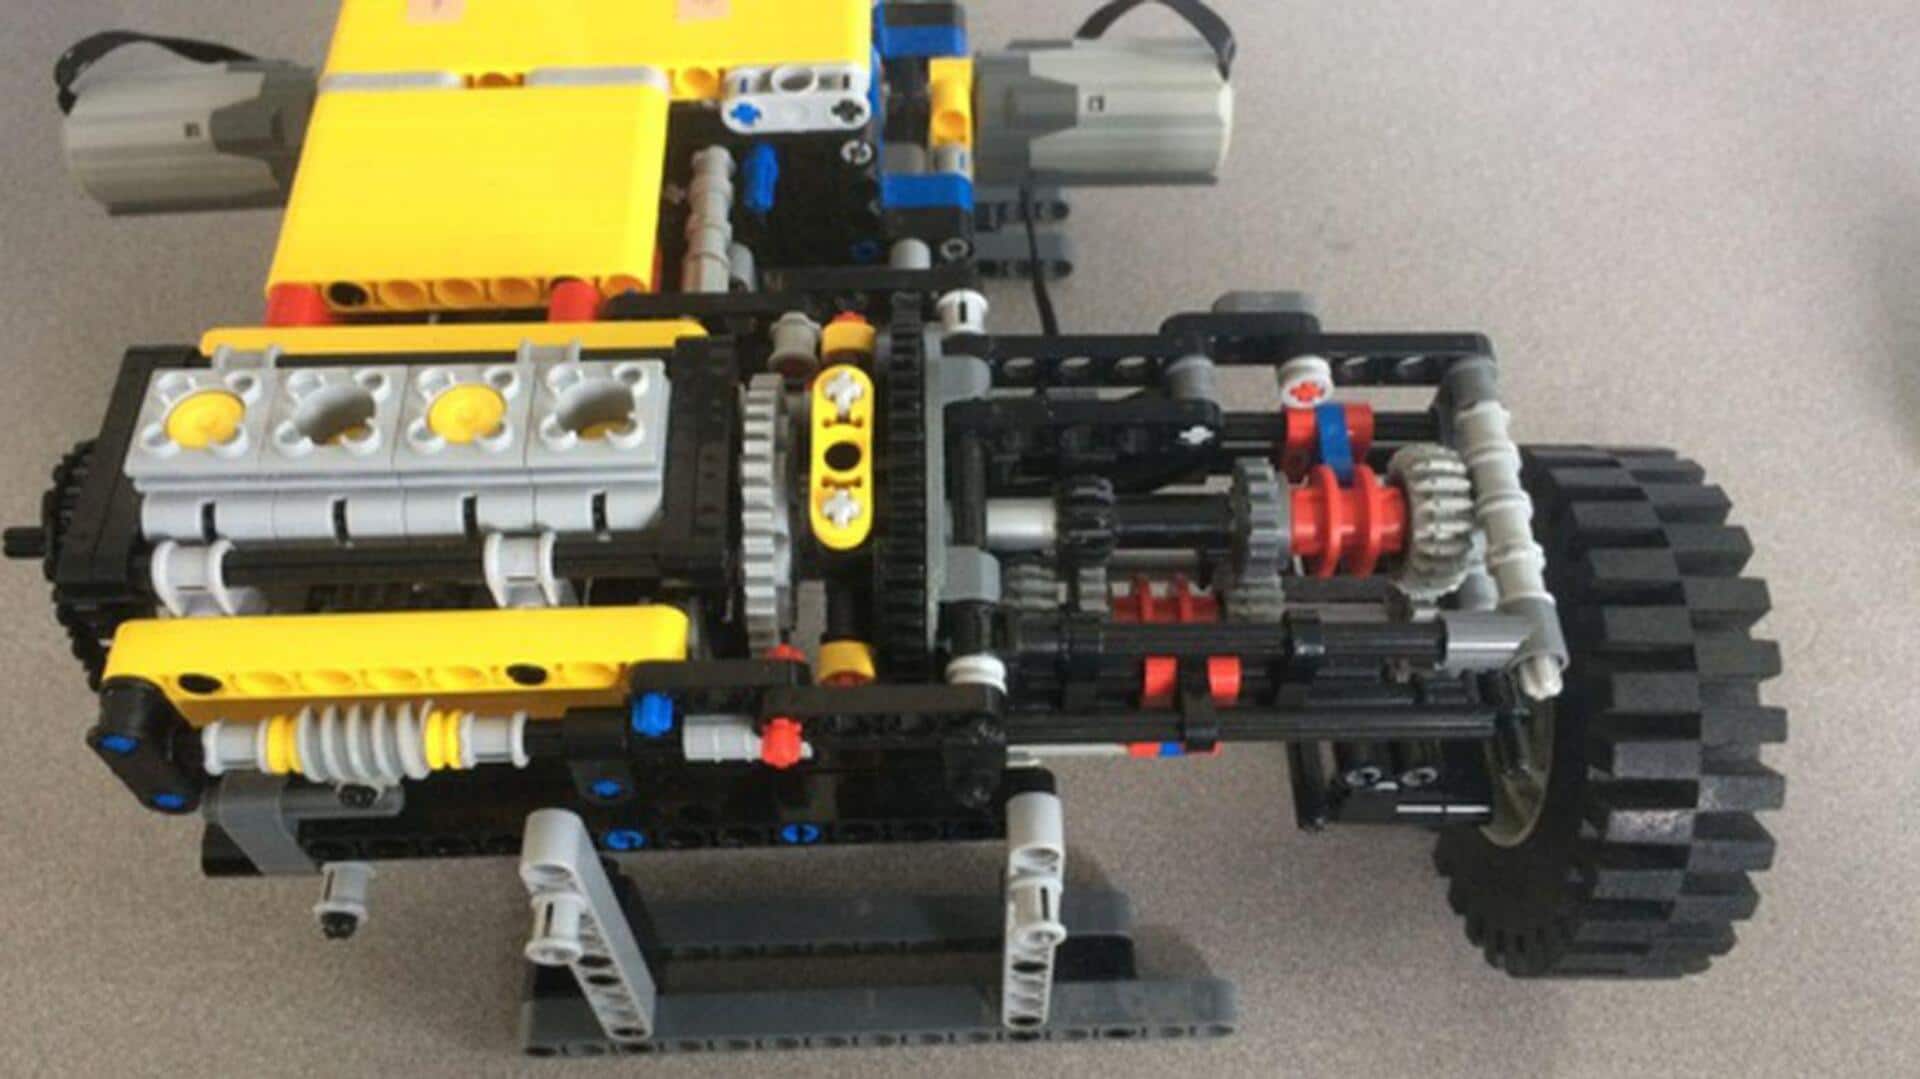 Renault's innovative E-Tech powertrain was born from Lego bricks